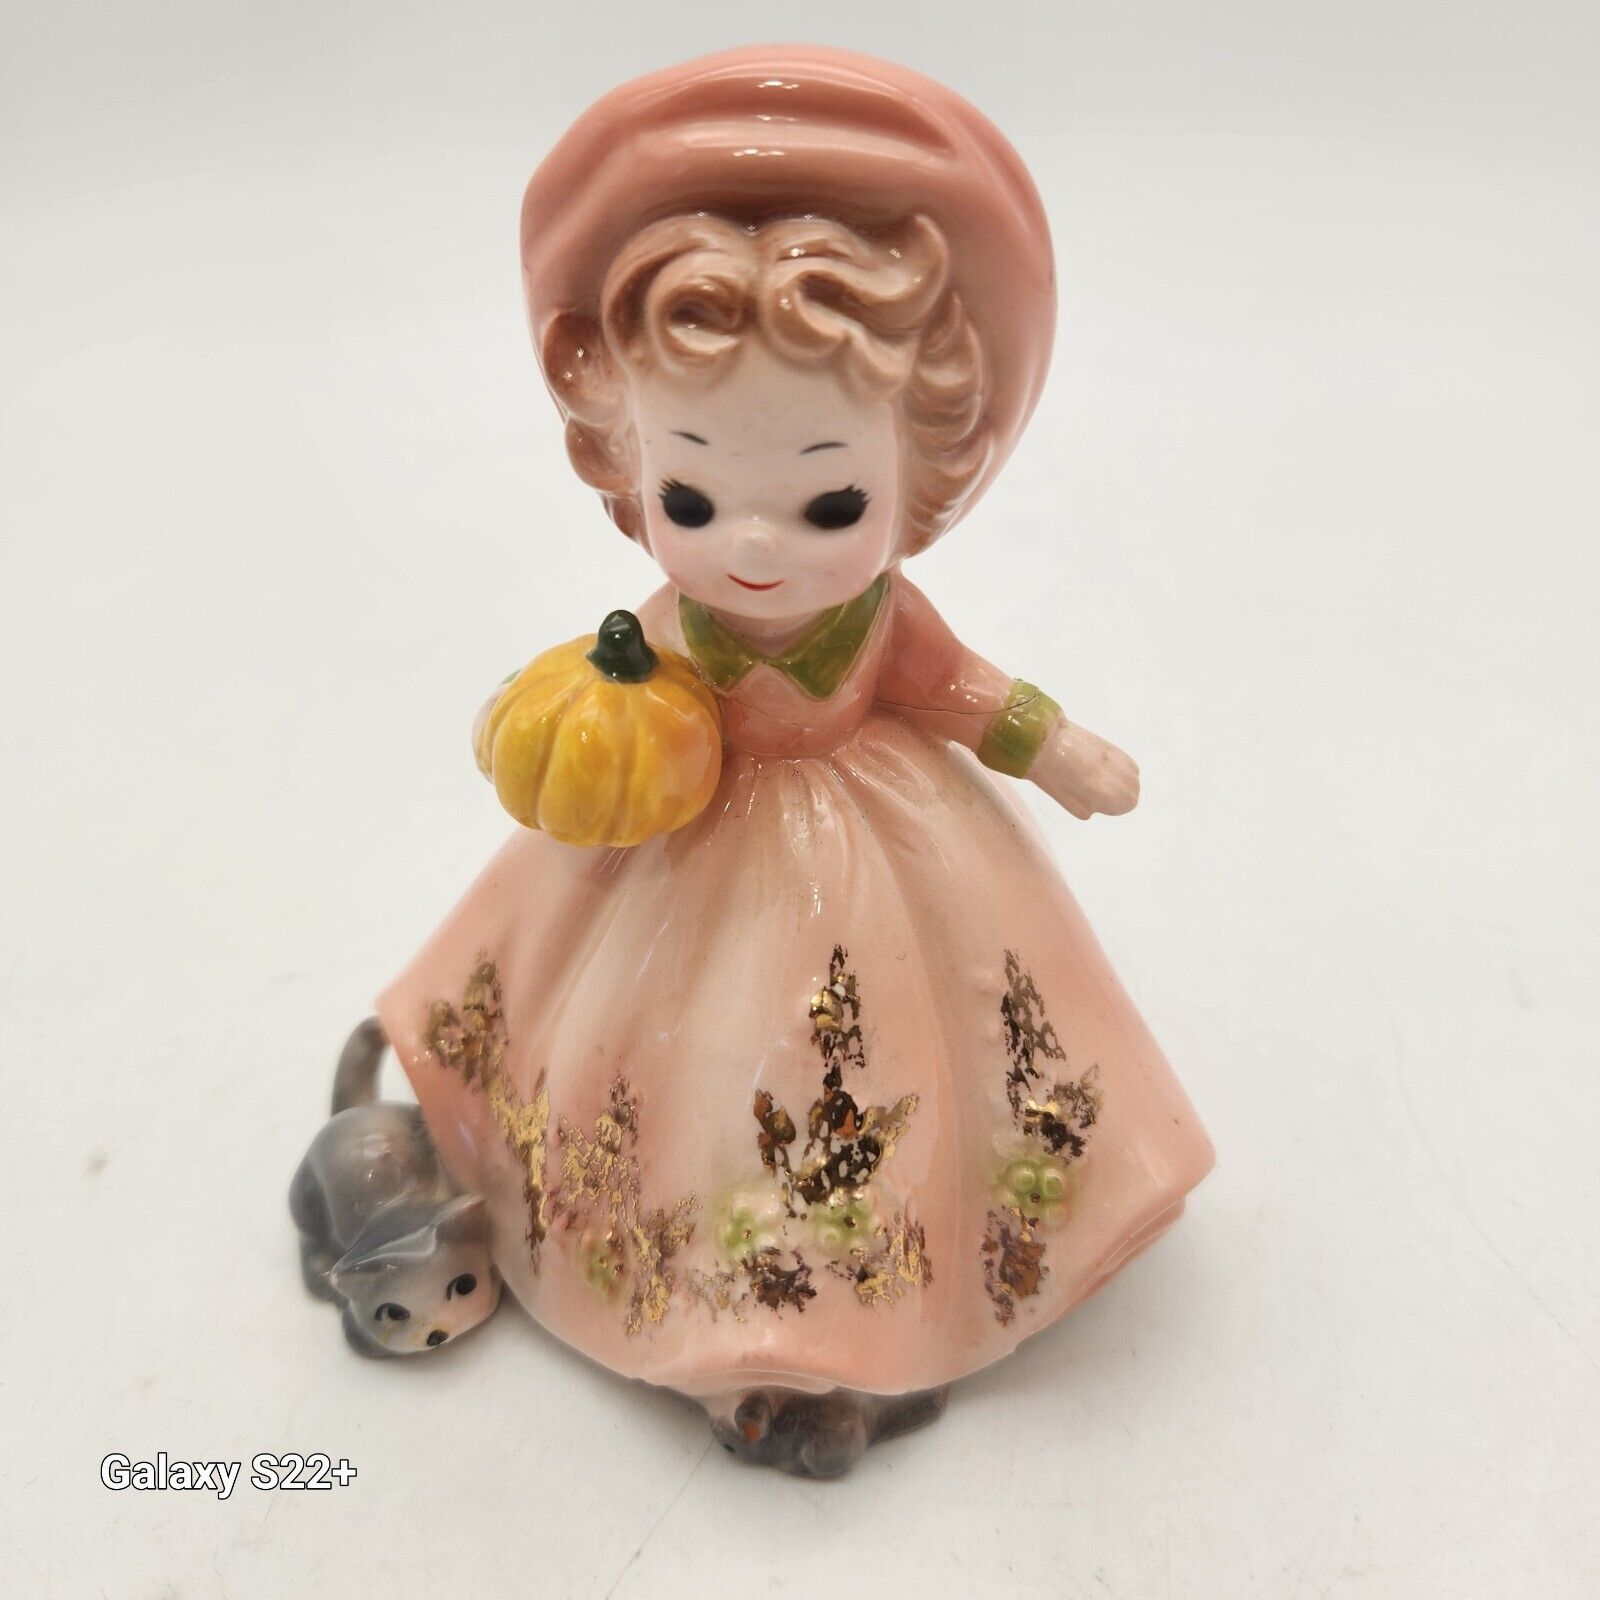 Rare Vintage Josef Originals October girl Figurine 1974 pumpkin Book Item READ